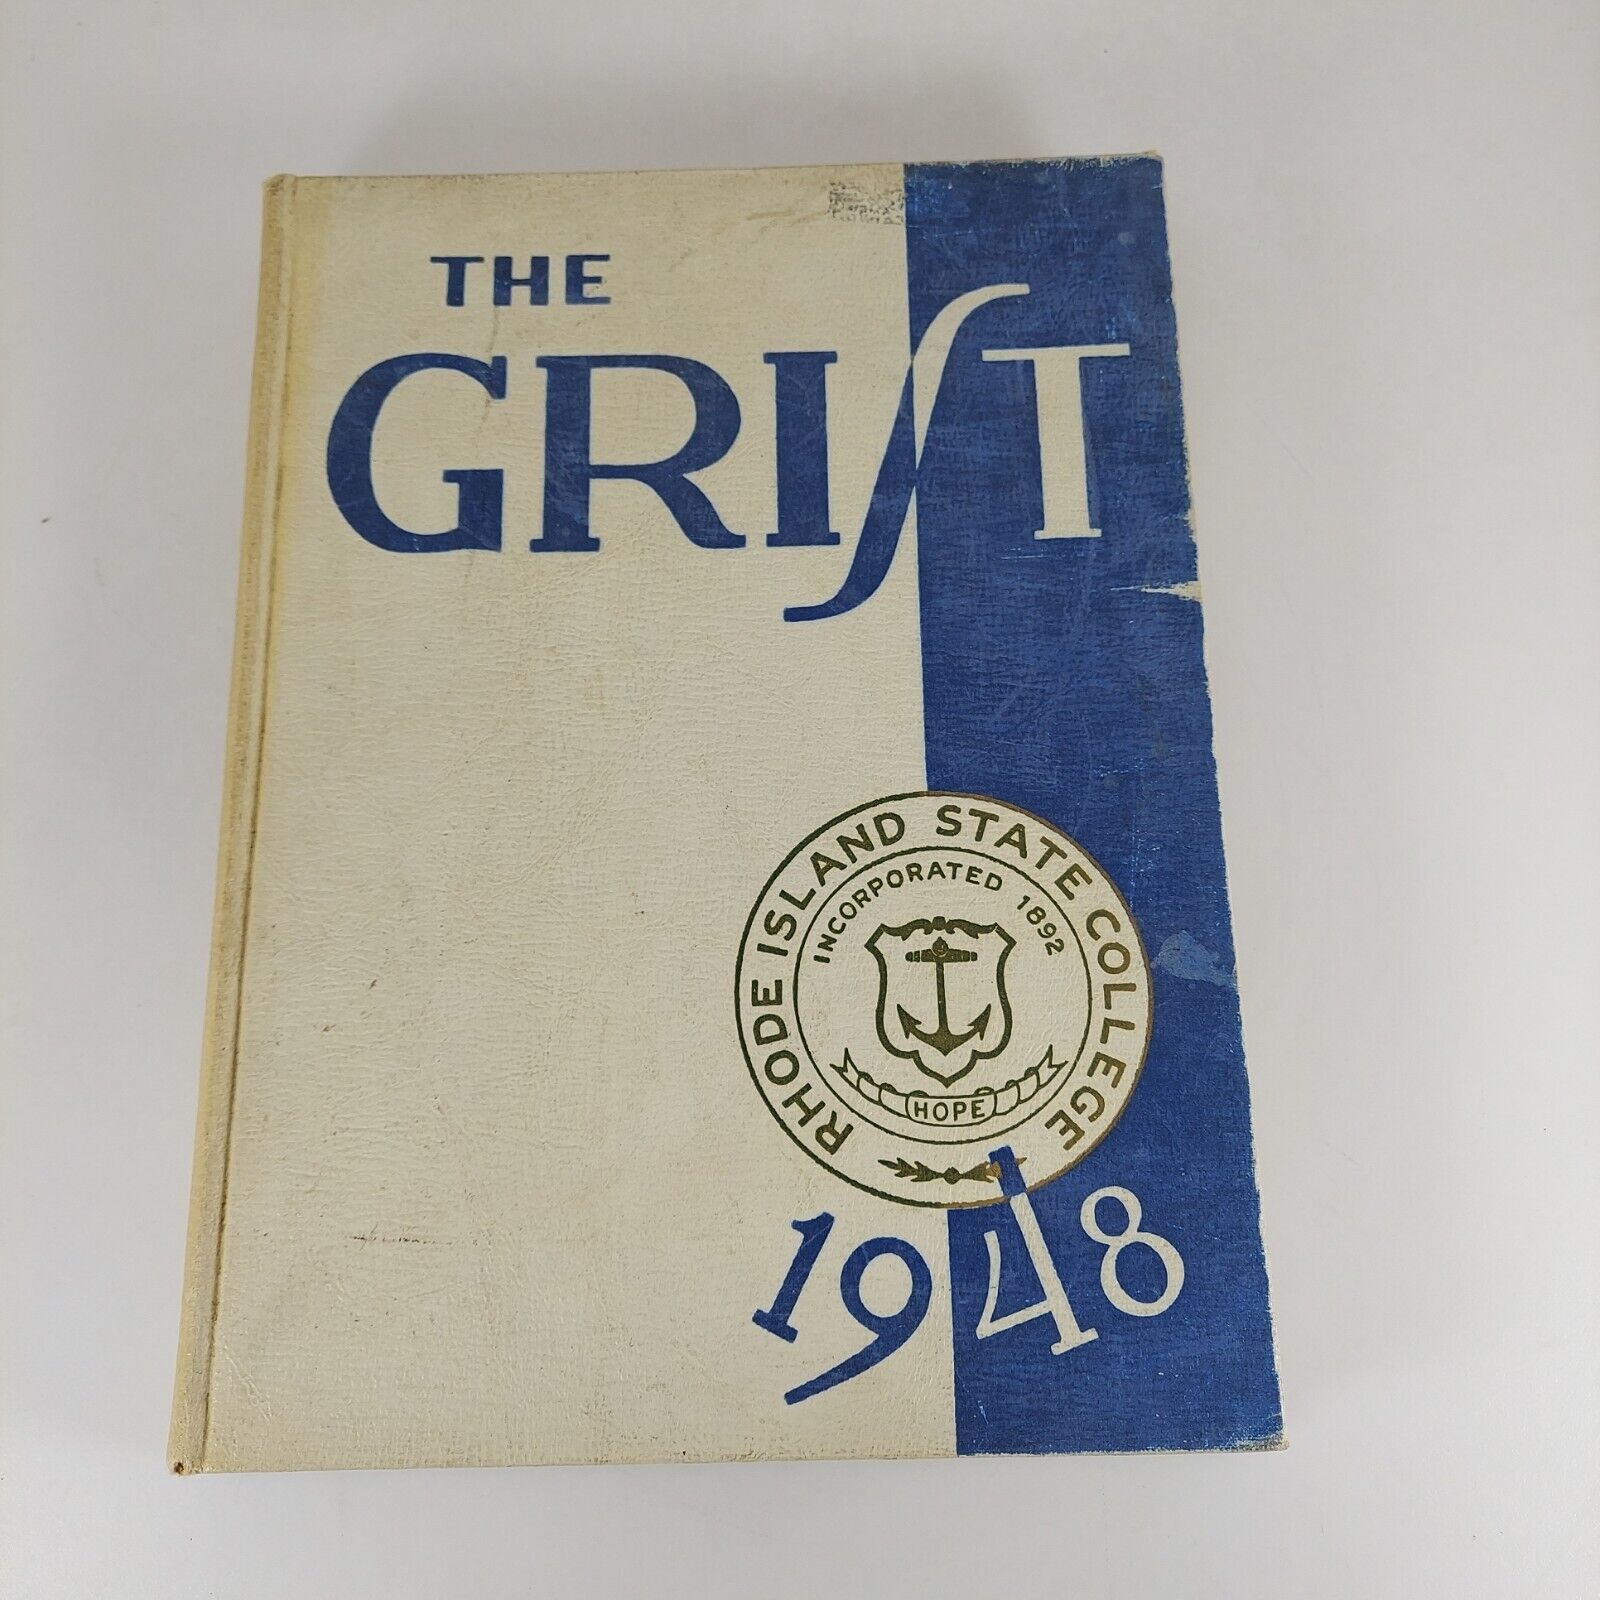 The Grist 1948 Rhode Island State College (URI) Yearbook, Kingston, Rhode Island